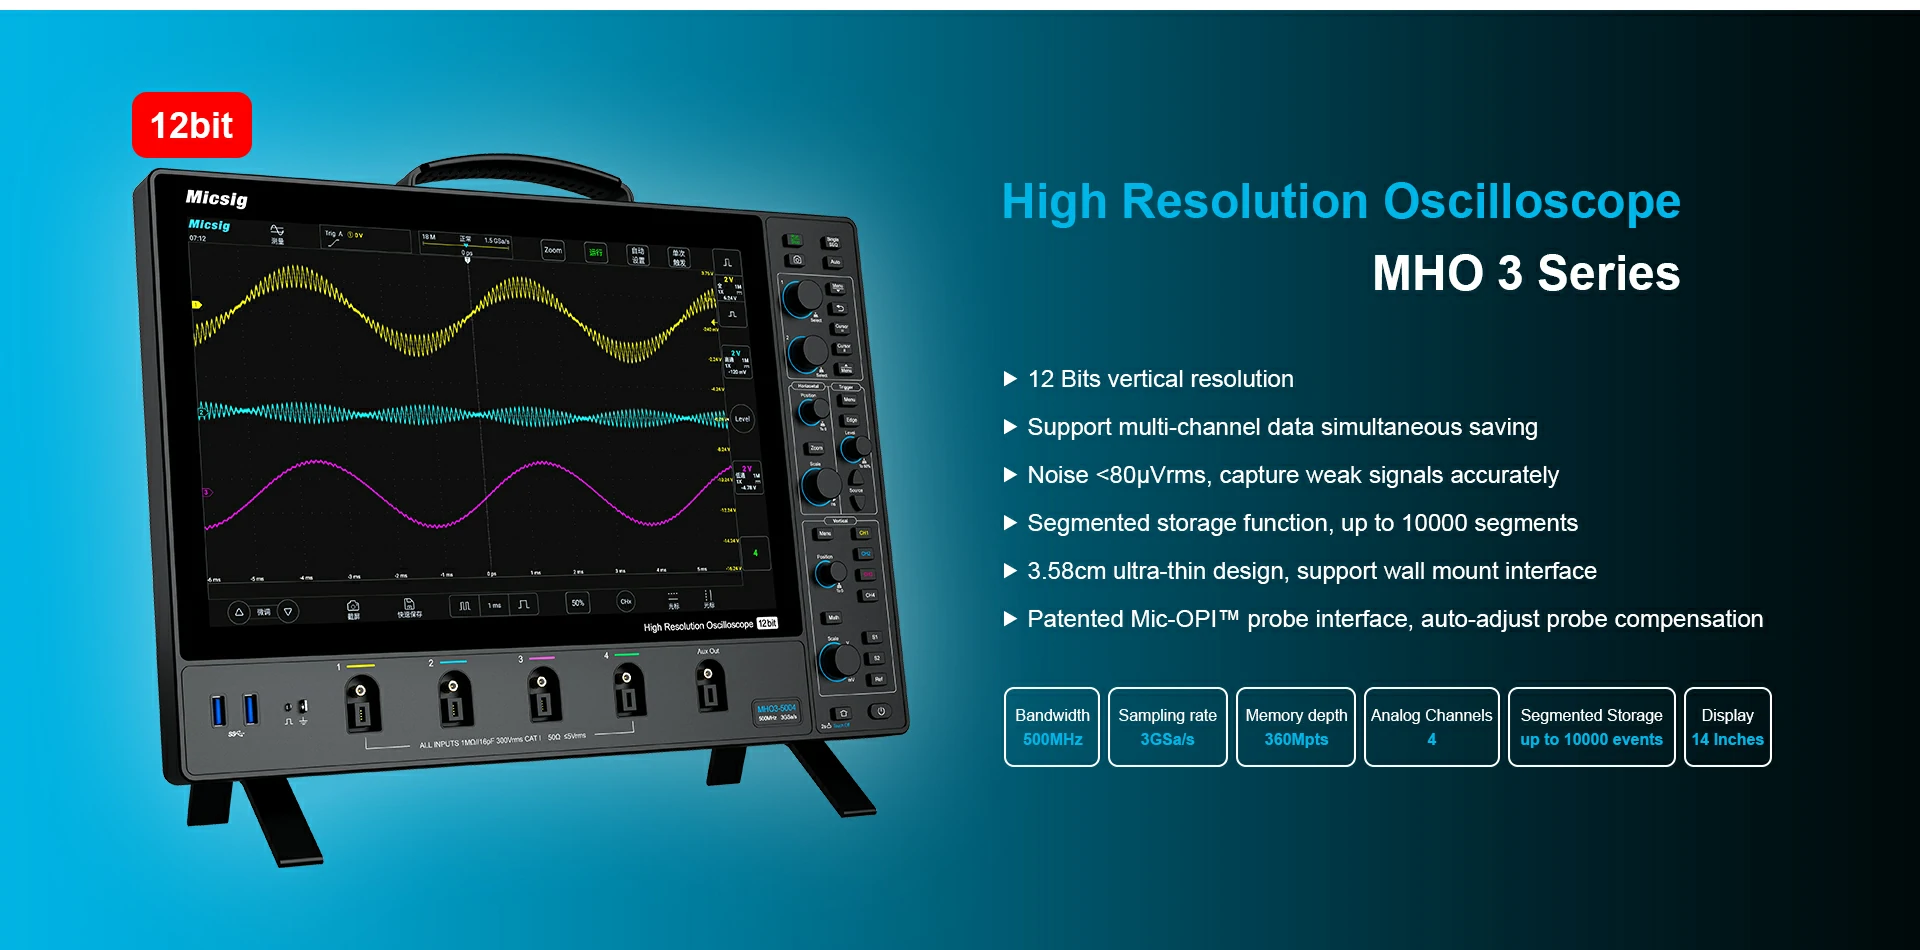 High Resolution Oscilloscope MHO Series